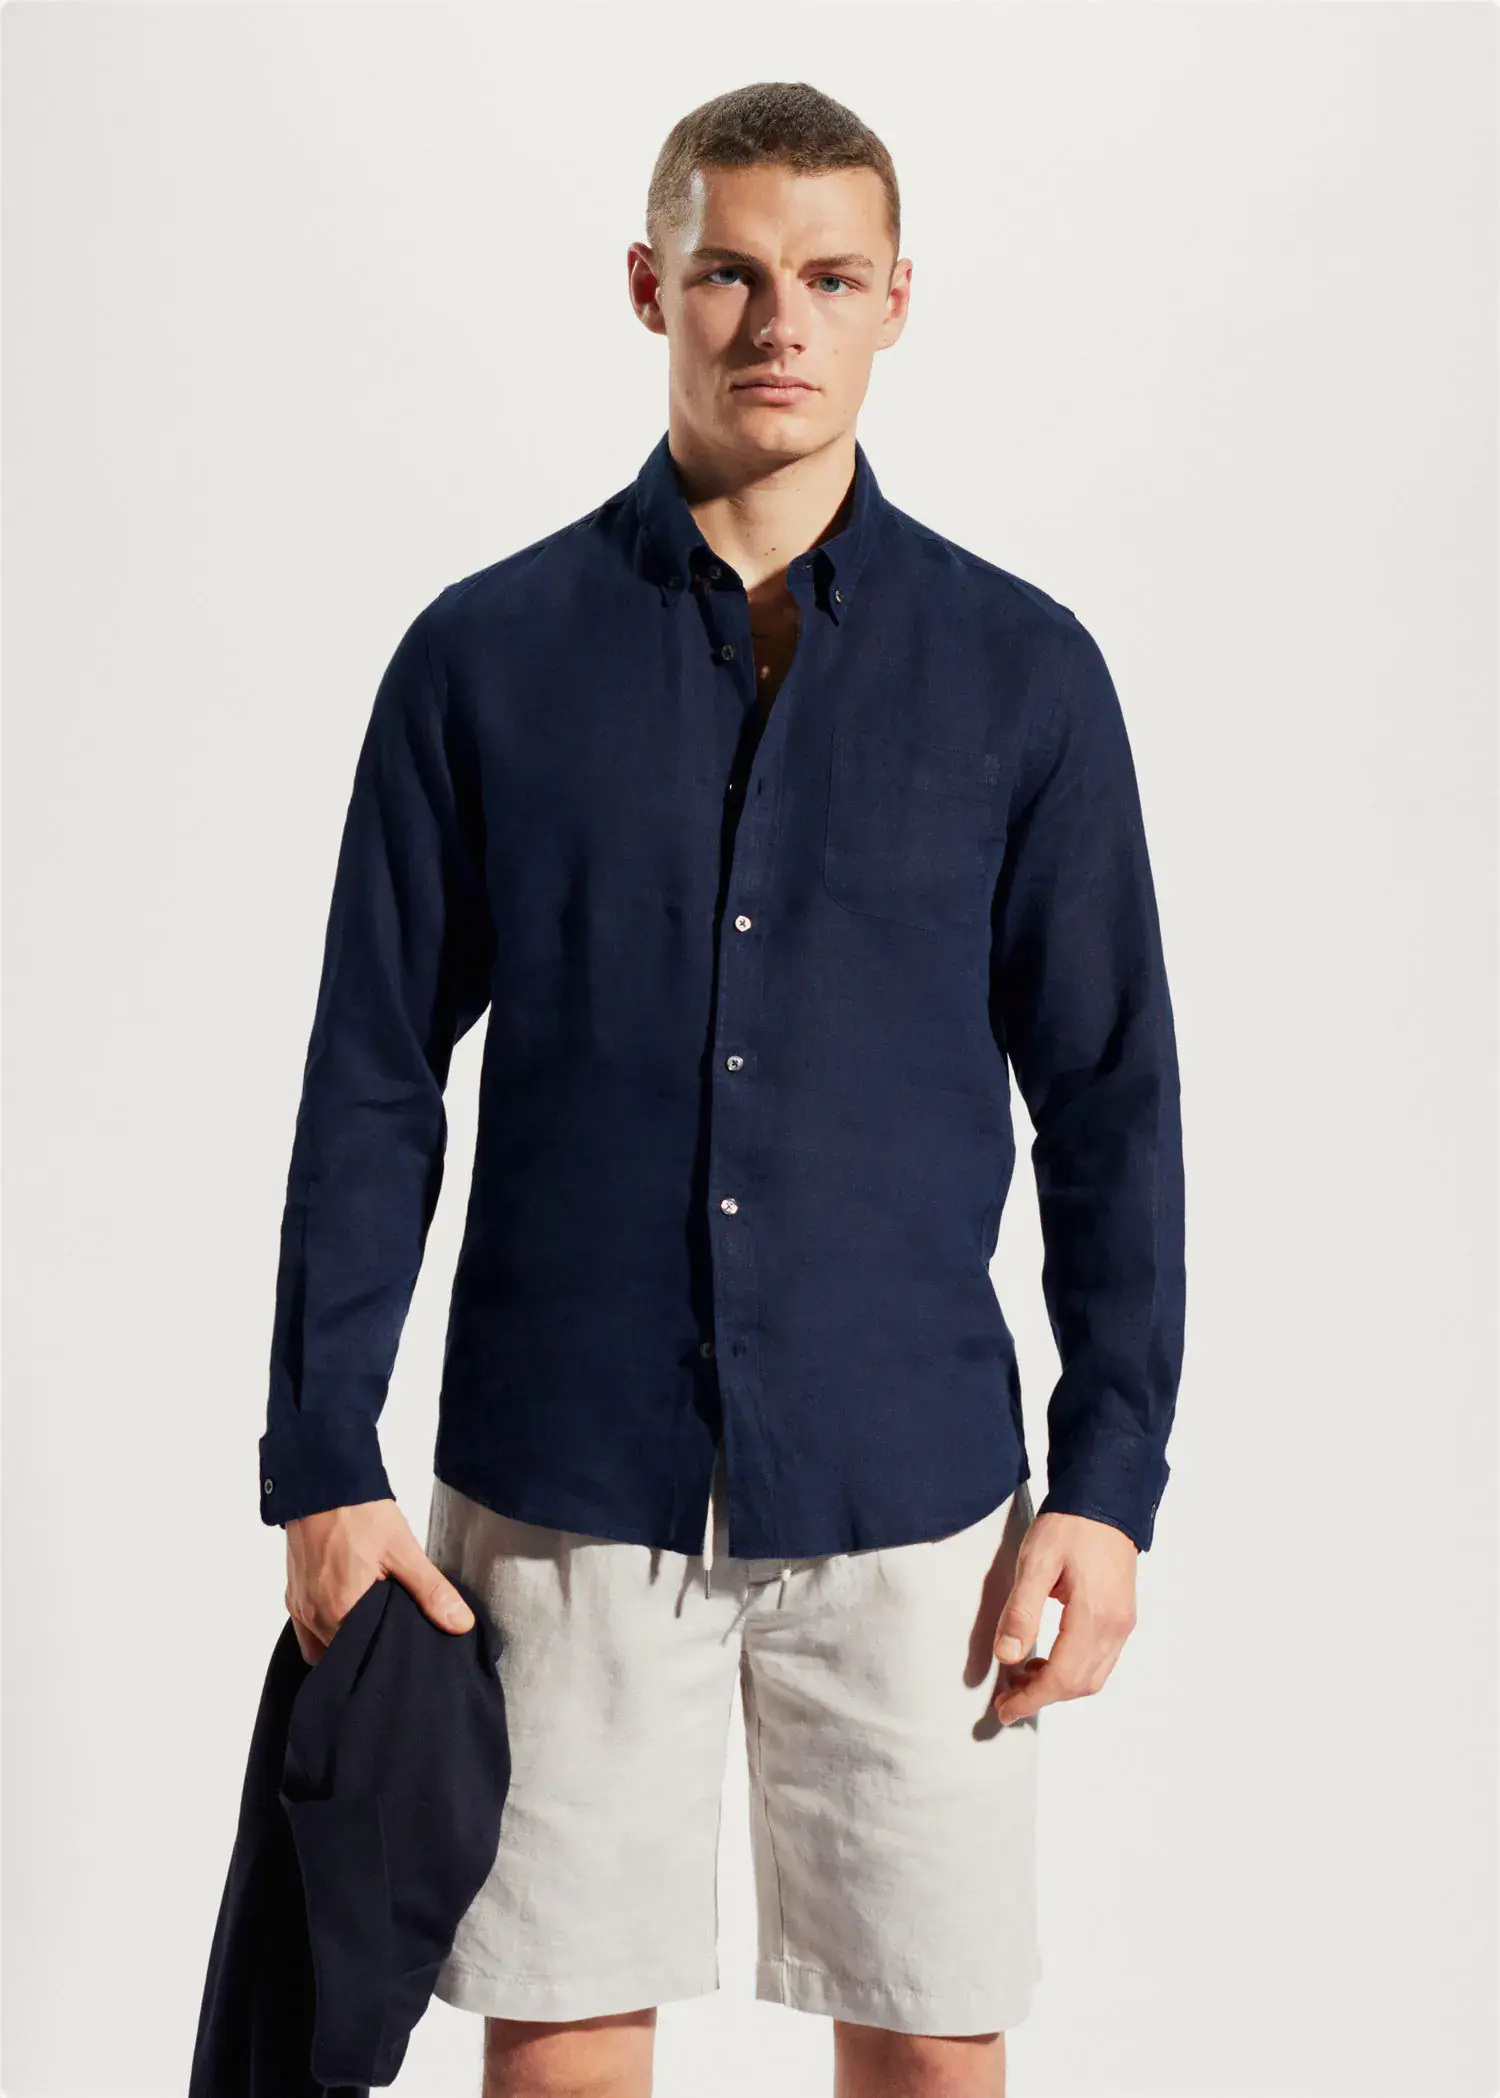 Mango 100% linen slim-fit shirt. a man in a blue shirt is holding a jacket. 